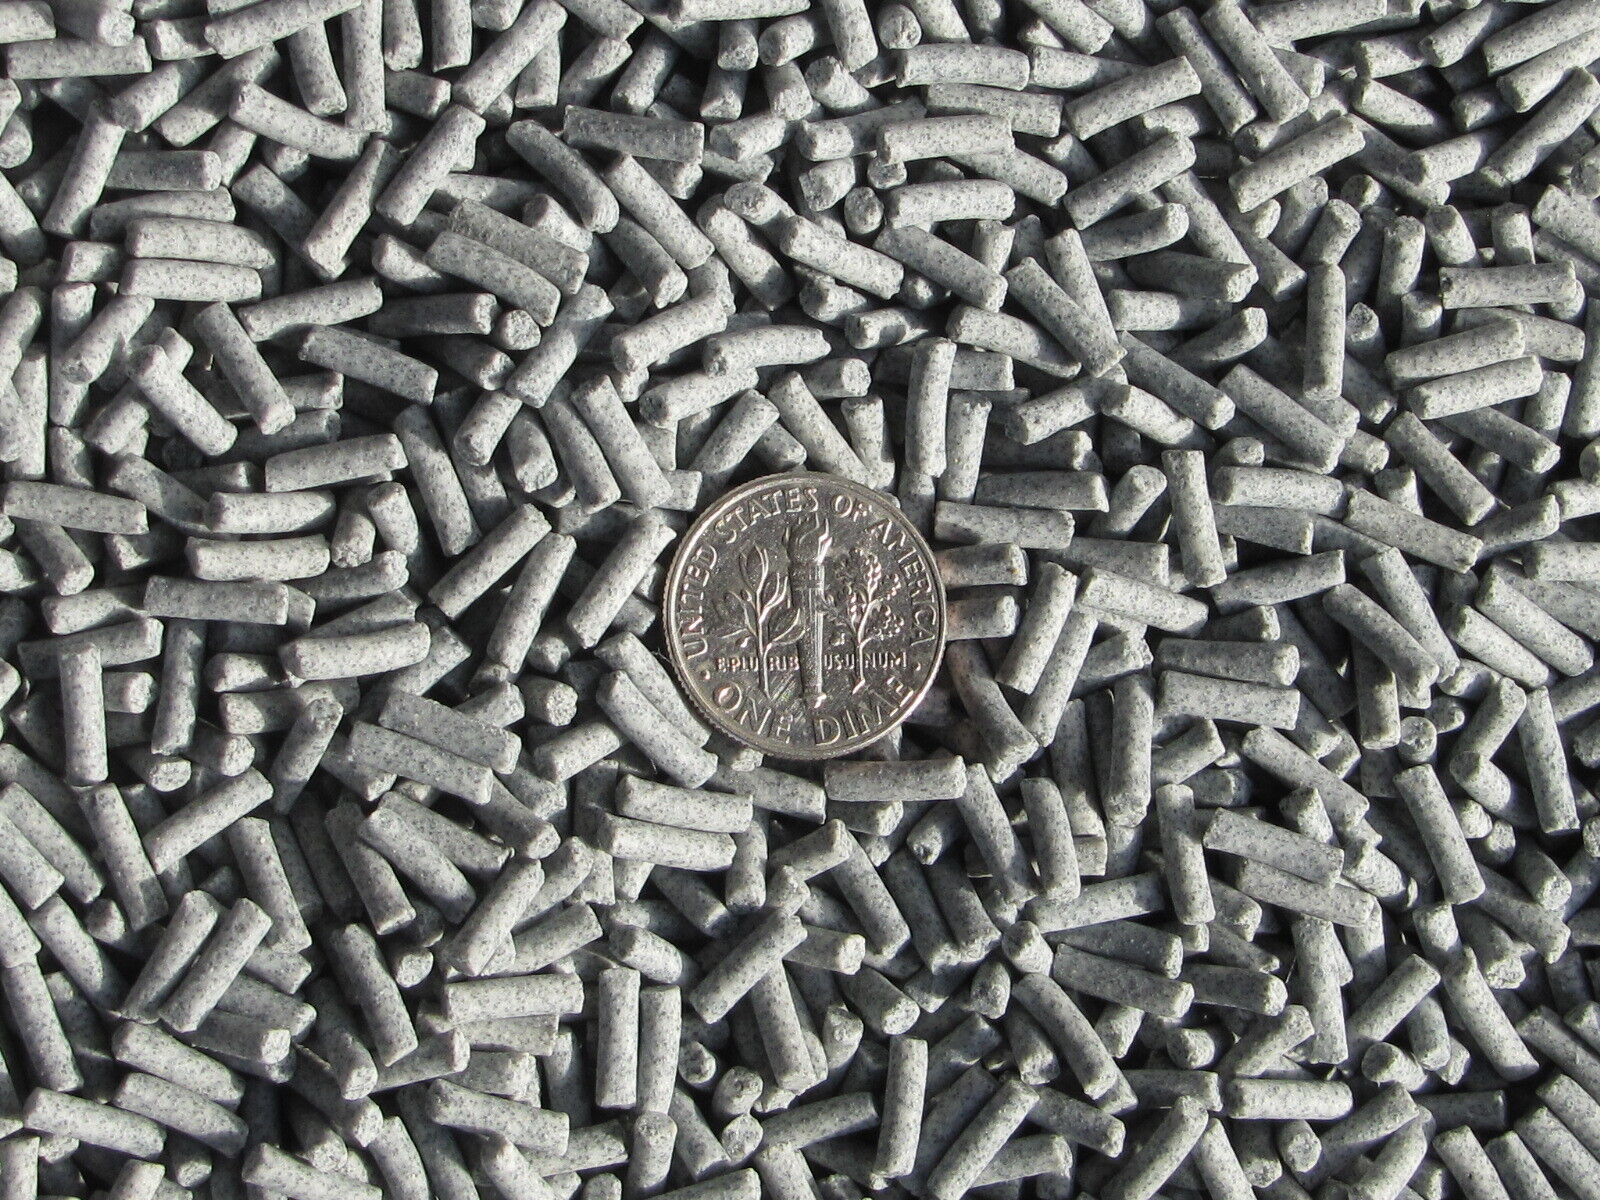 1 Lb. 2.5 X 8 mm pin Abrasive Fast Cutting Ceramic Tumbling Tumbler Media